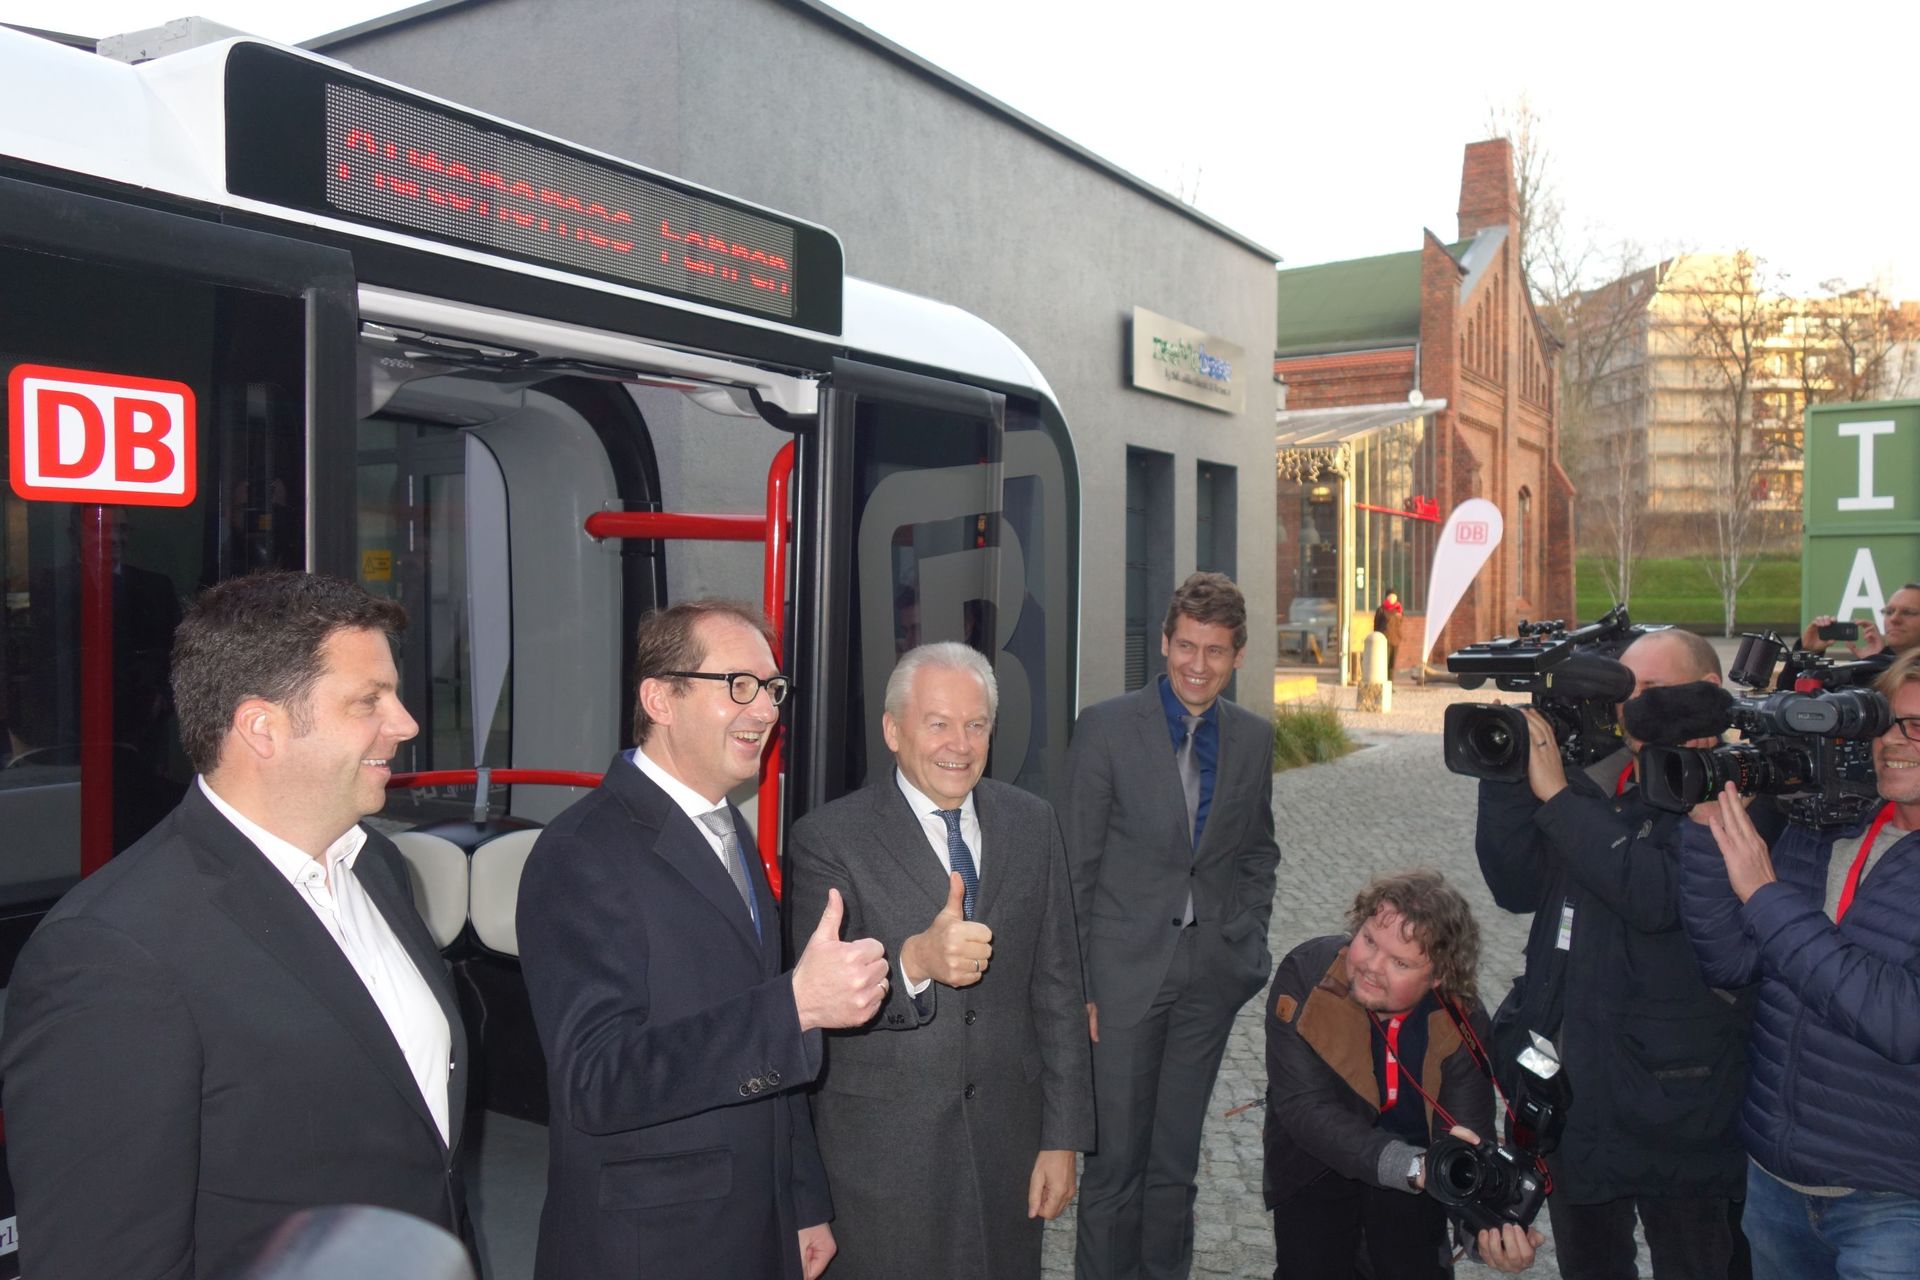 Deutsche Bahn Chairman Dr. Rüdiger Grube and Transport Minister Alexander Dobrindt. Photo via Euref Campus.